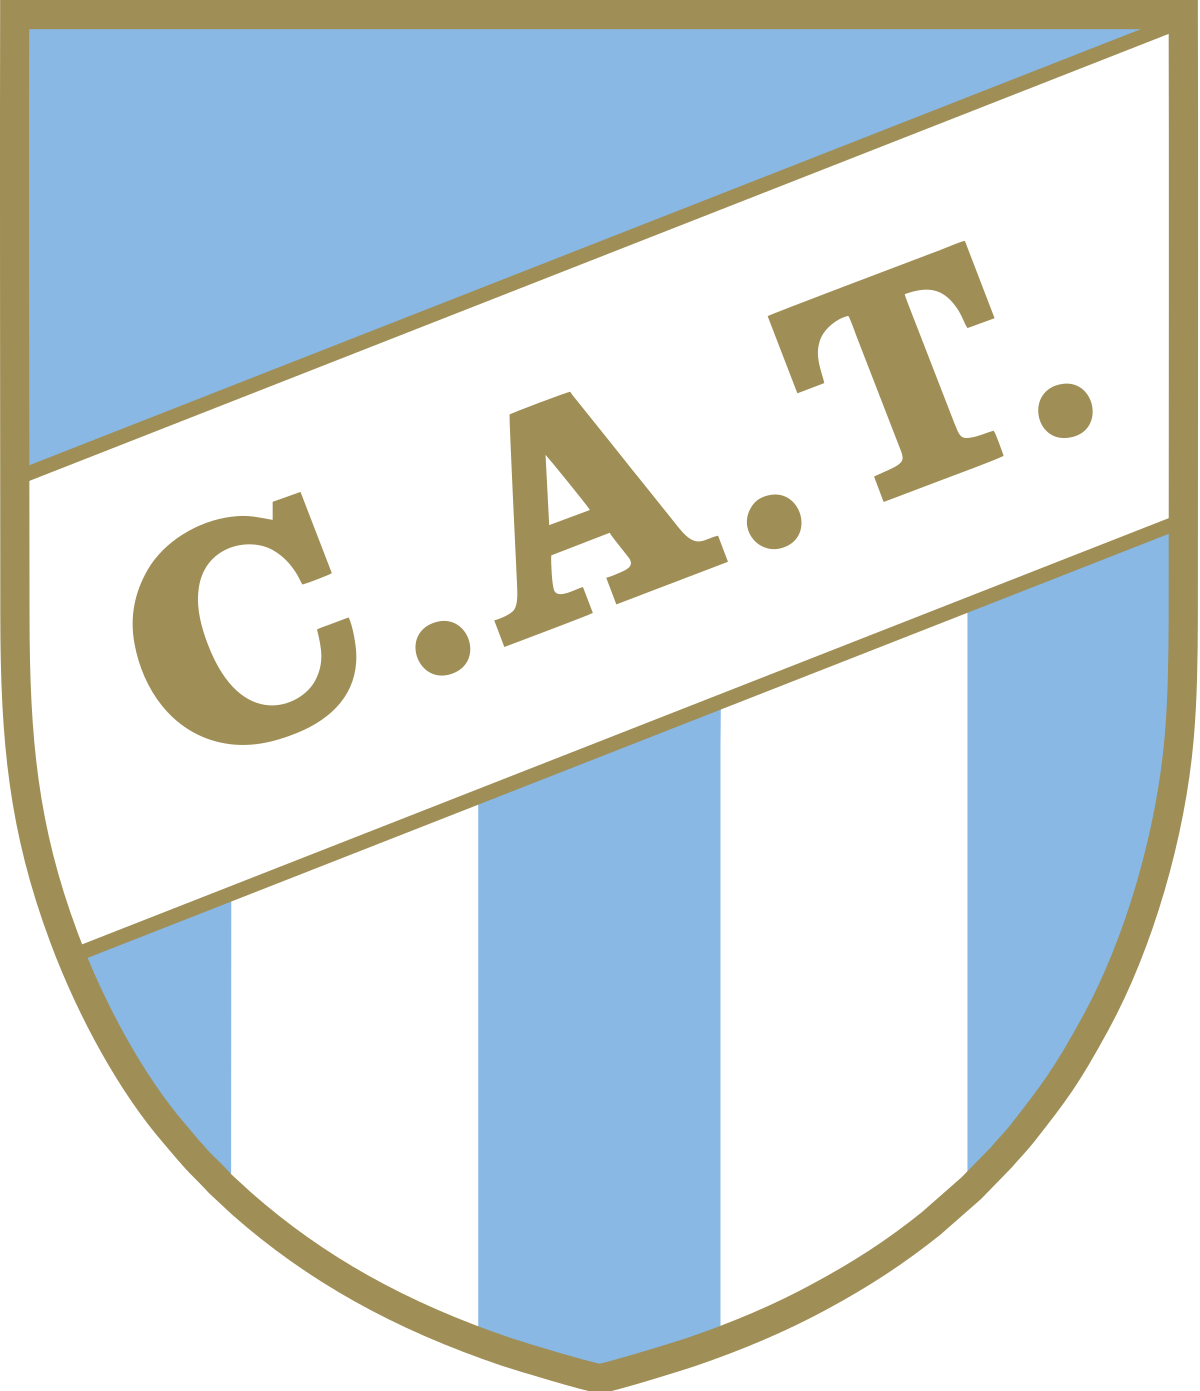 Atletico Tucuman